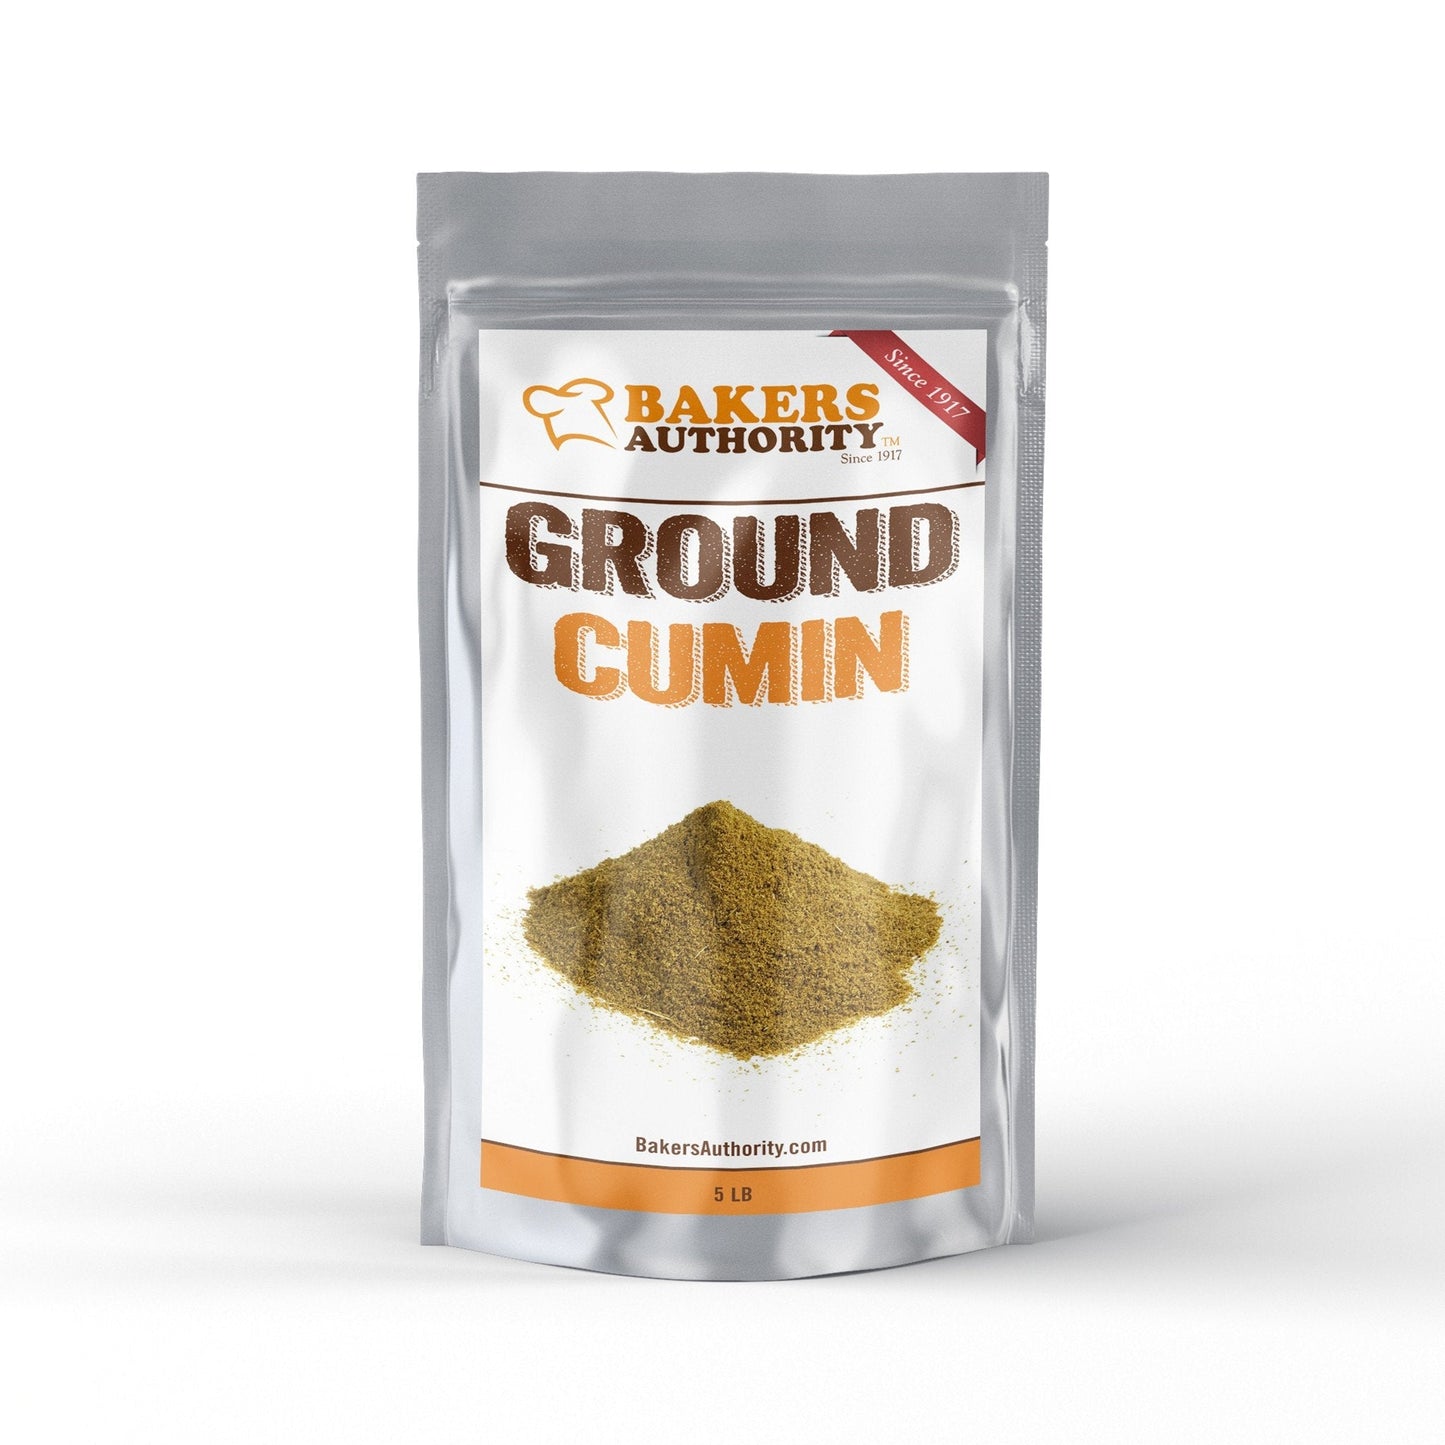 Ground Cumin